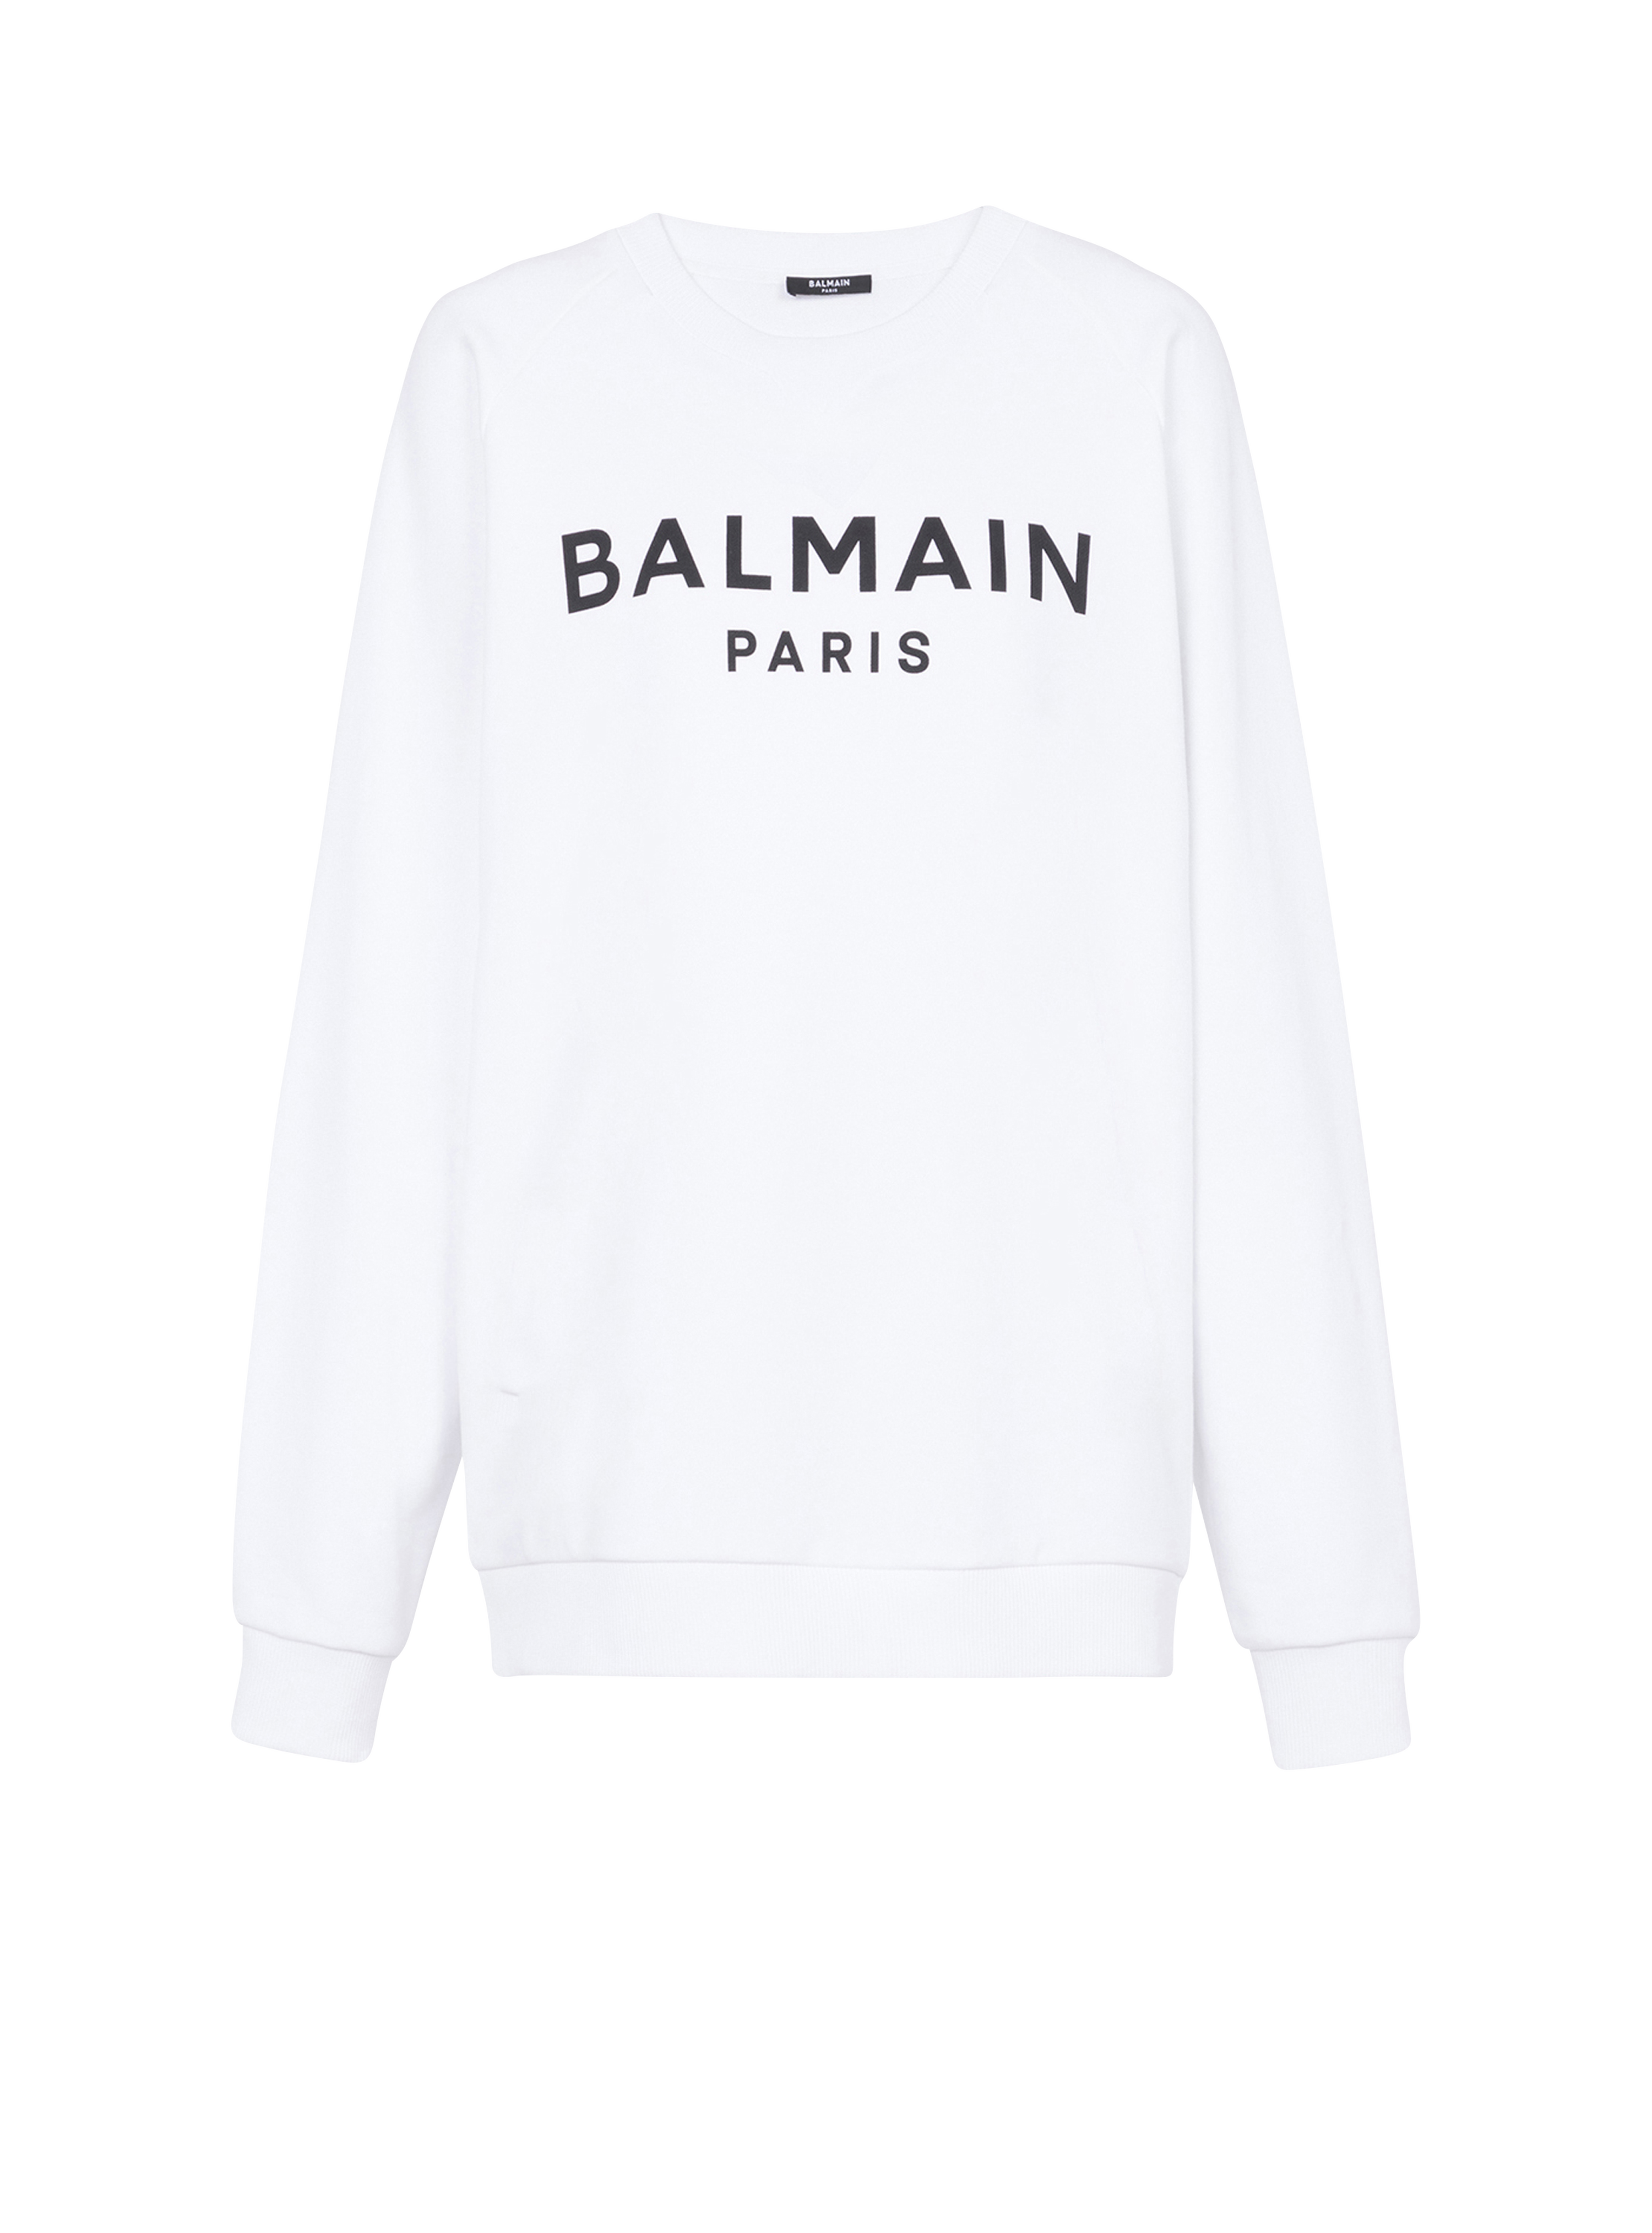 Sweat en coton avec logo imprimé Balmain, blanc